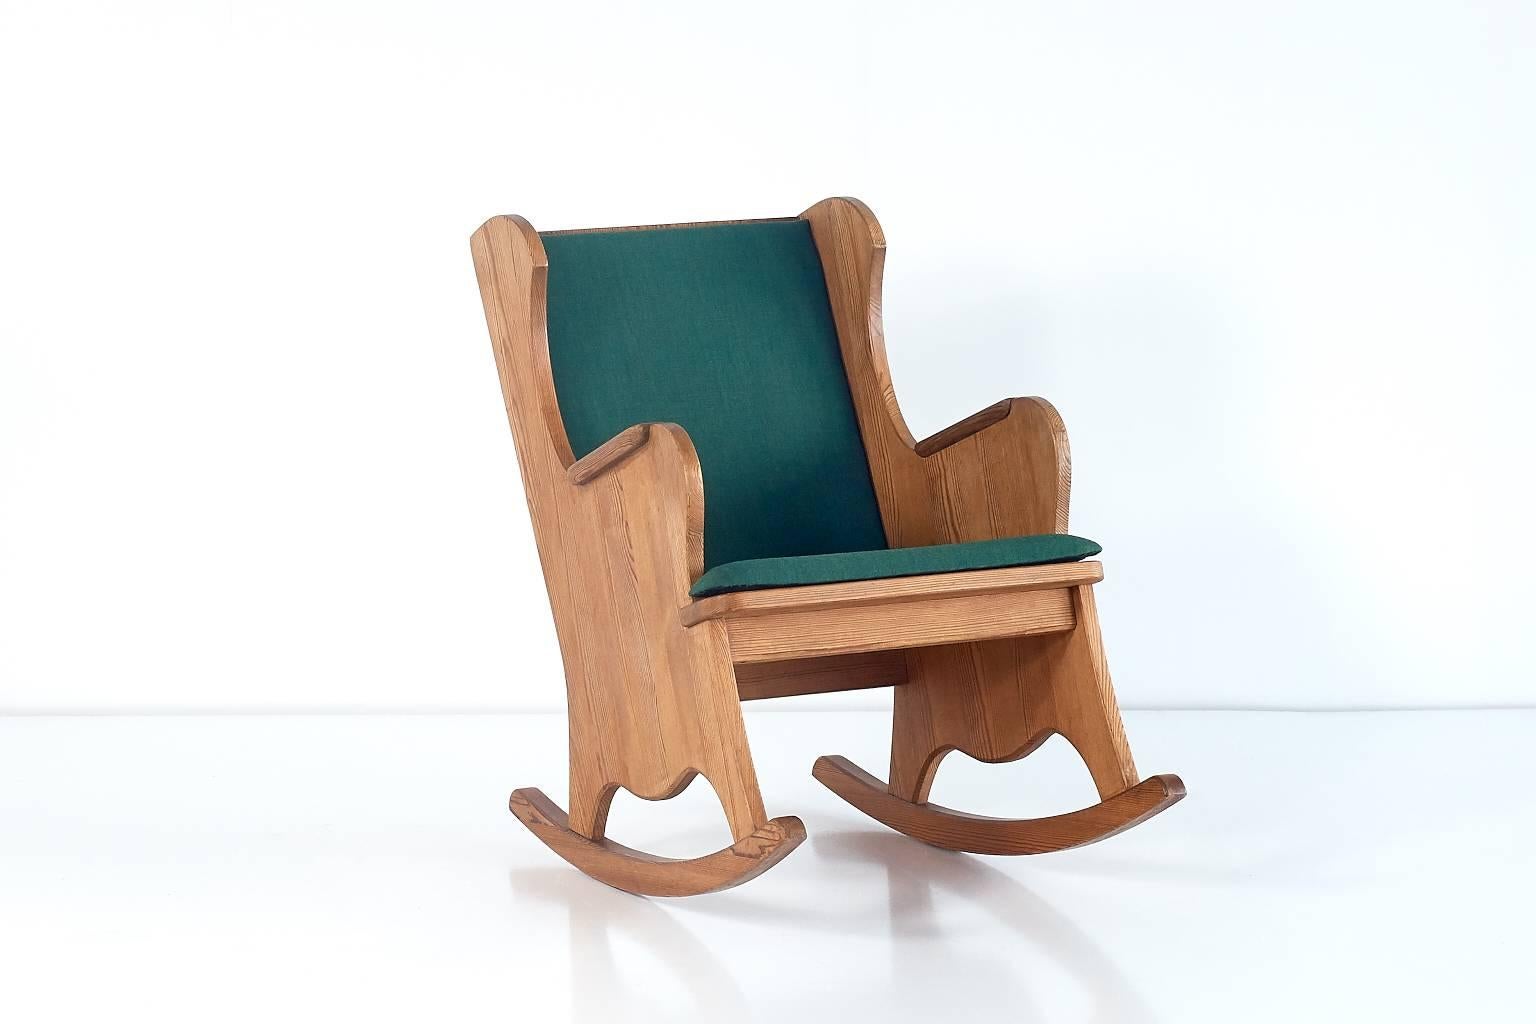 Scandinavian Modern Axel Einar Hjorth 'Lovö' Rocking Chair for Nordiska Kompaniet, 1932